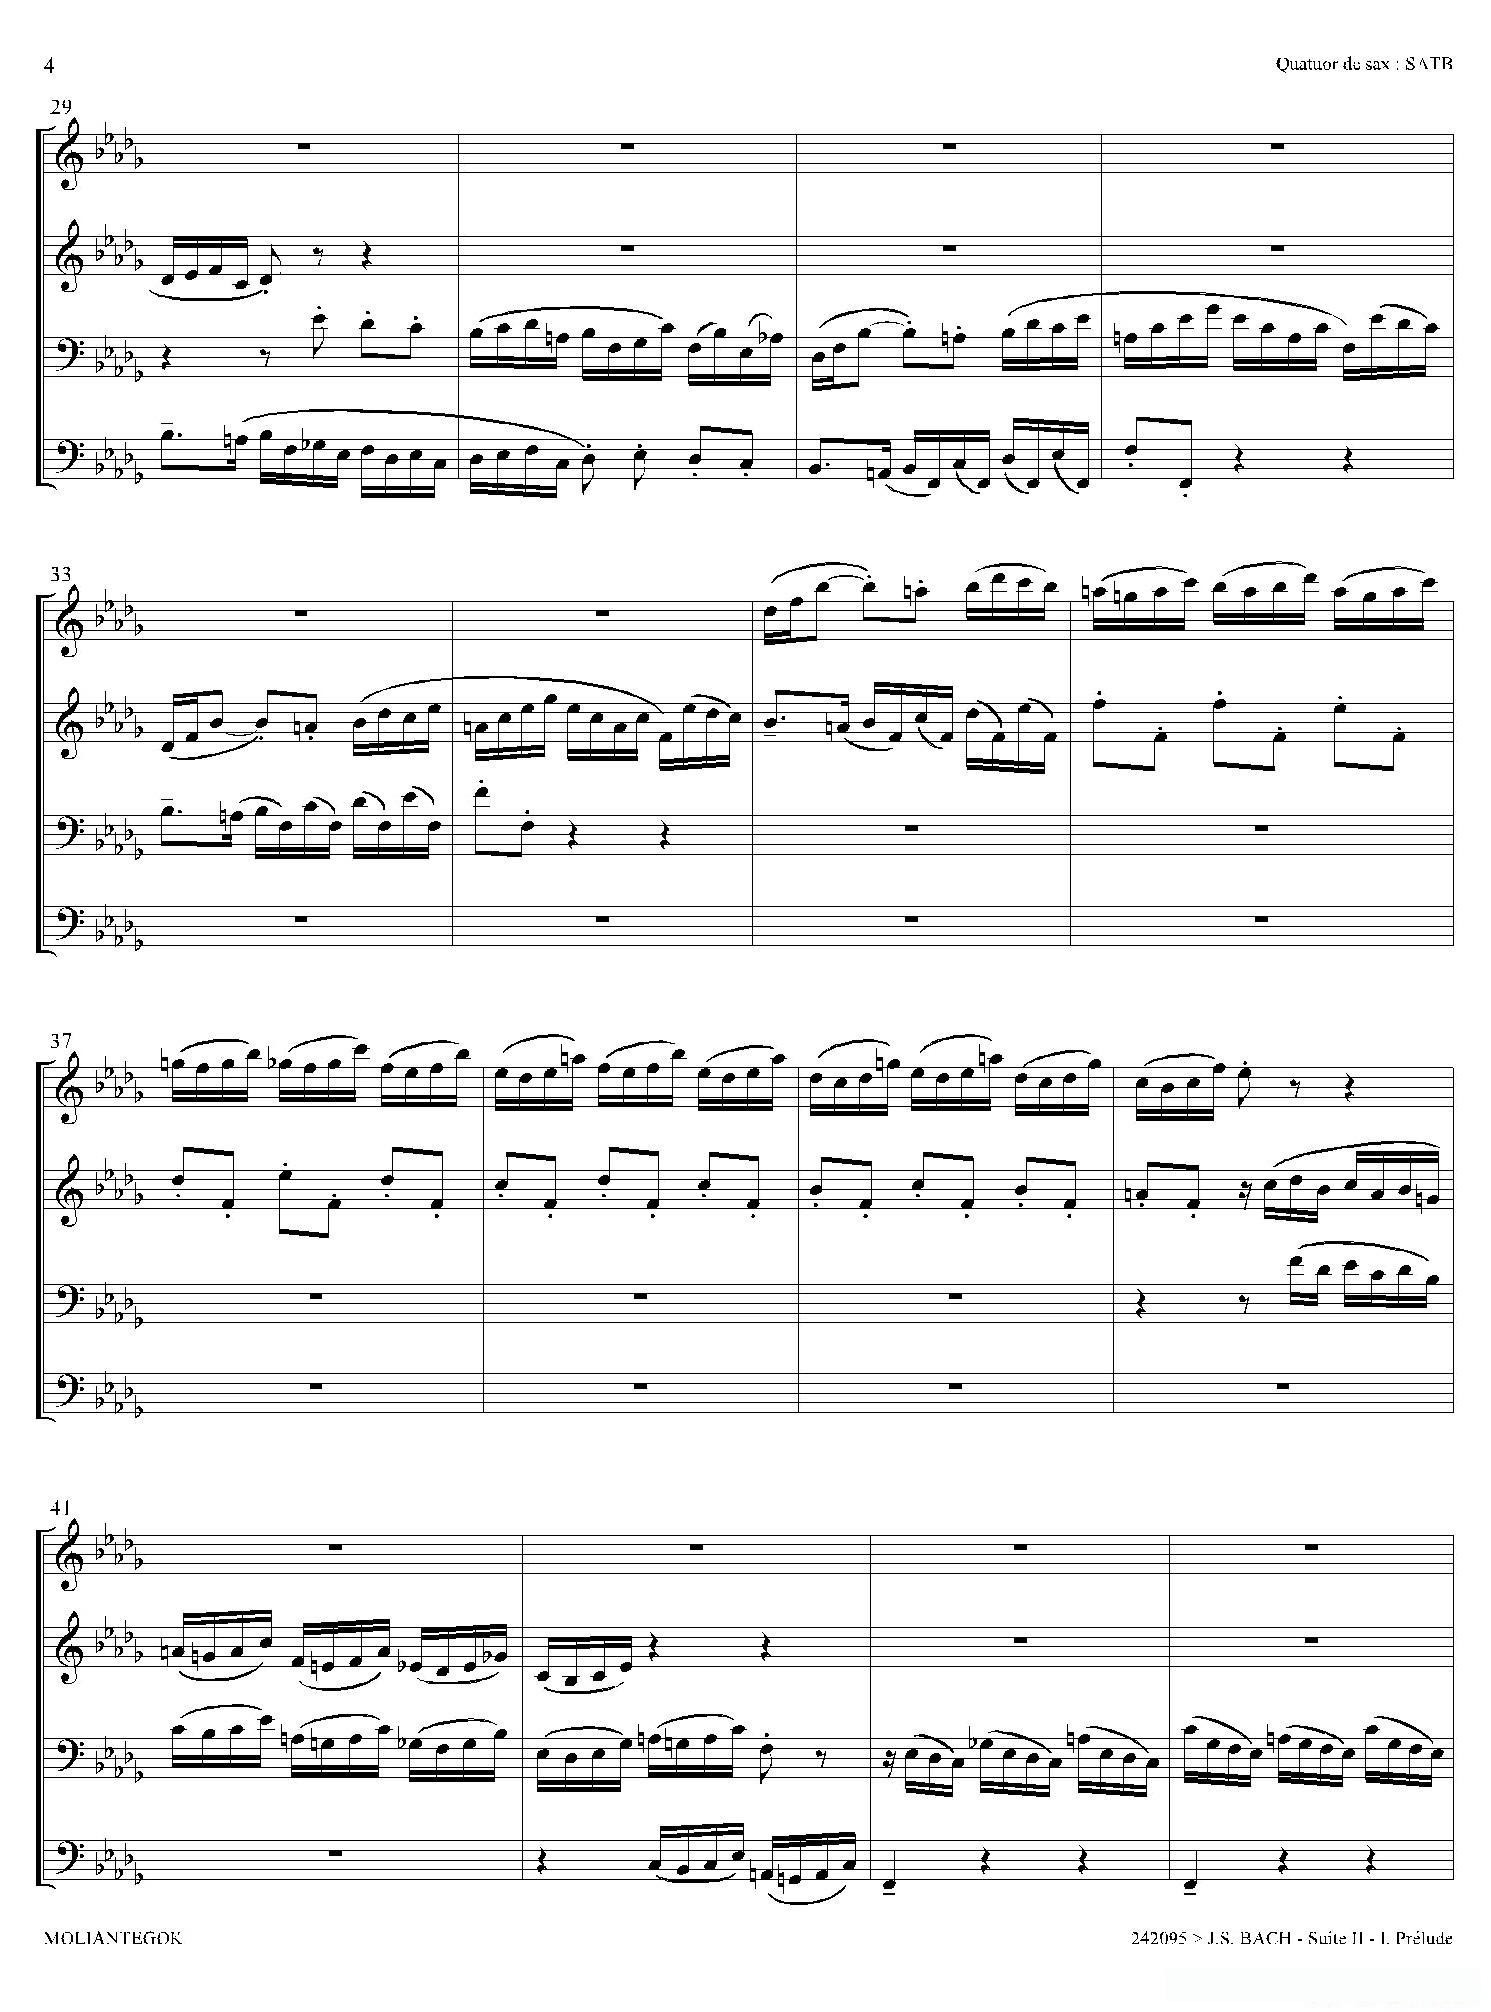 Suite anglaise No 2,BWV 807（法国组曲之二·前奏曲）（四重奏总谱）